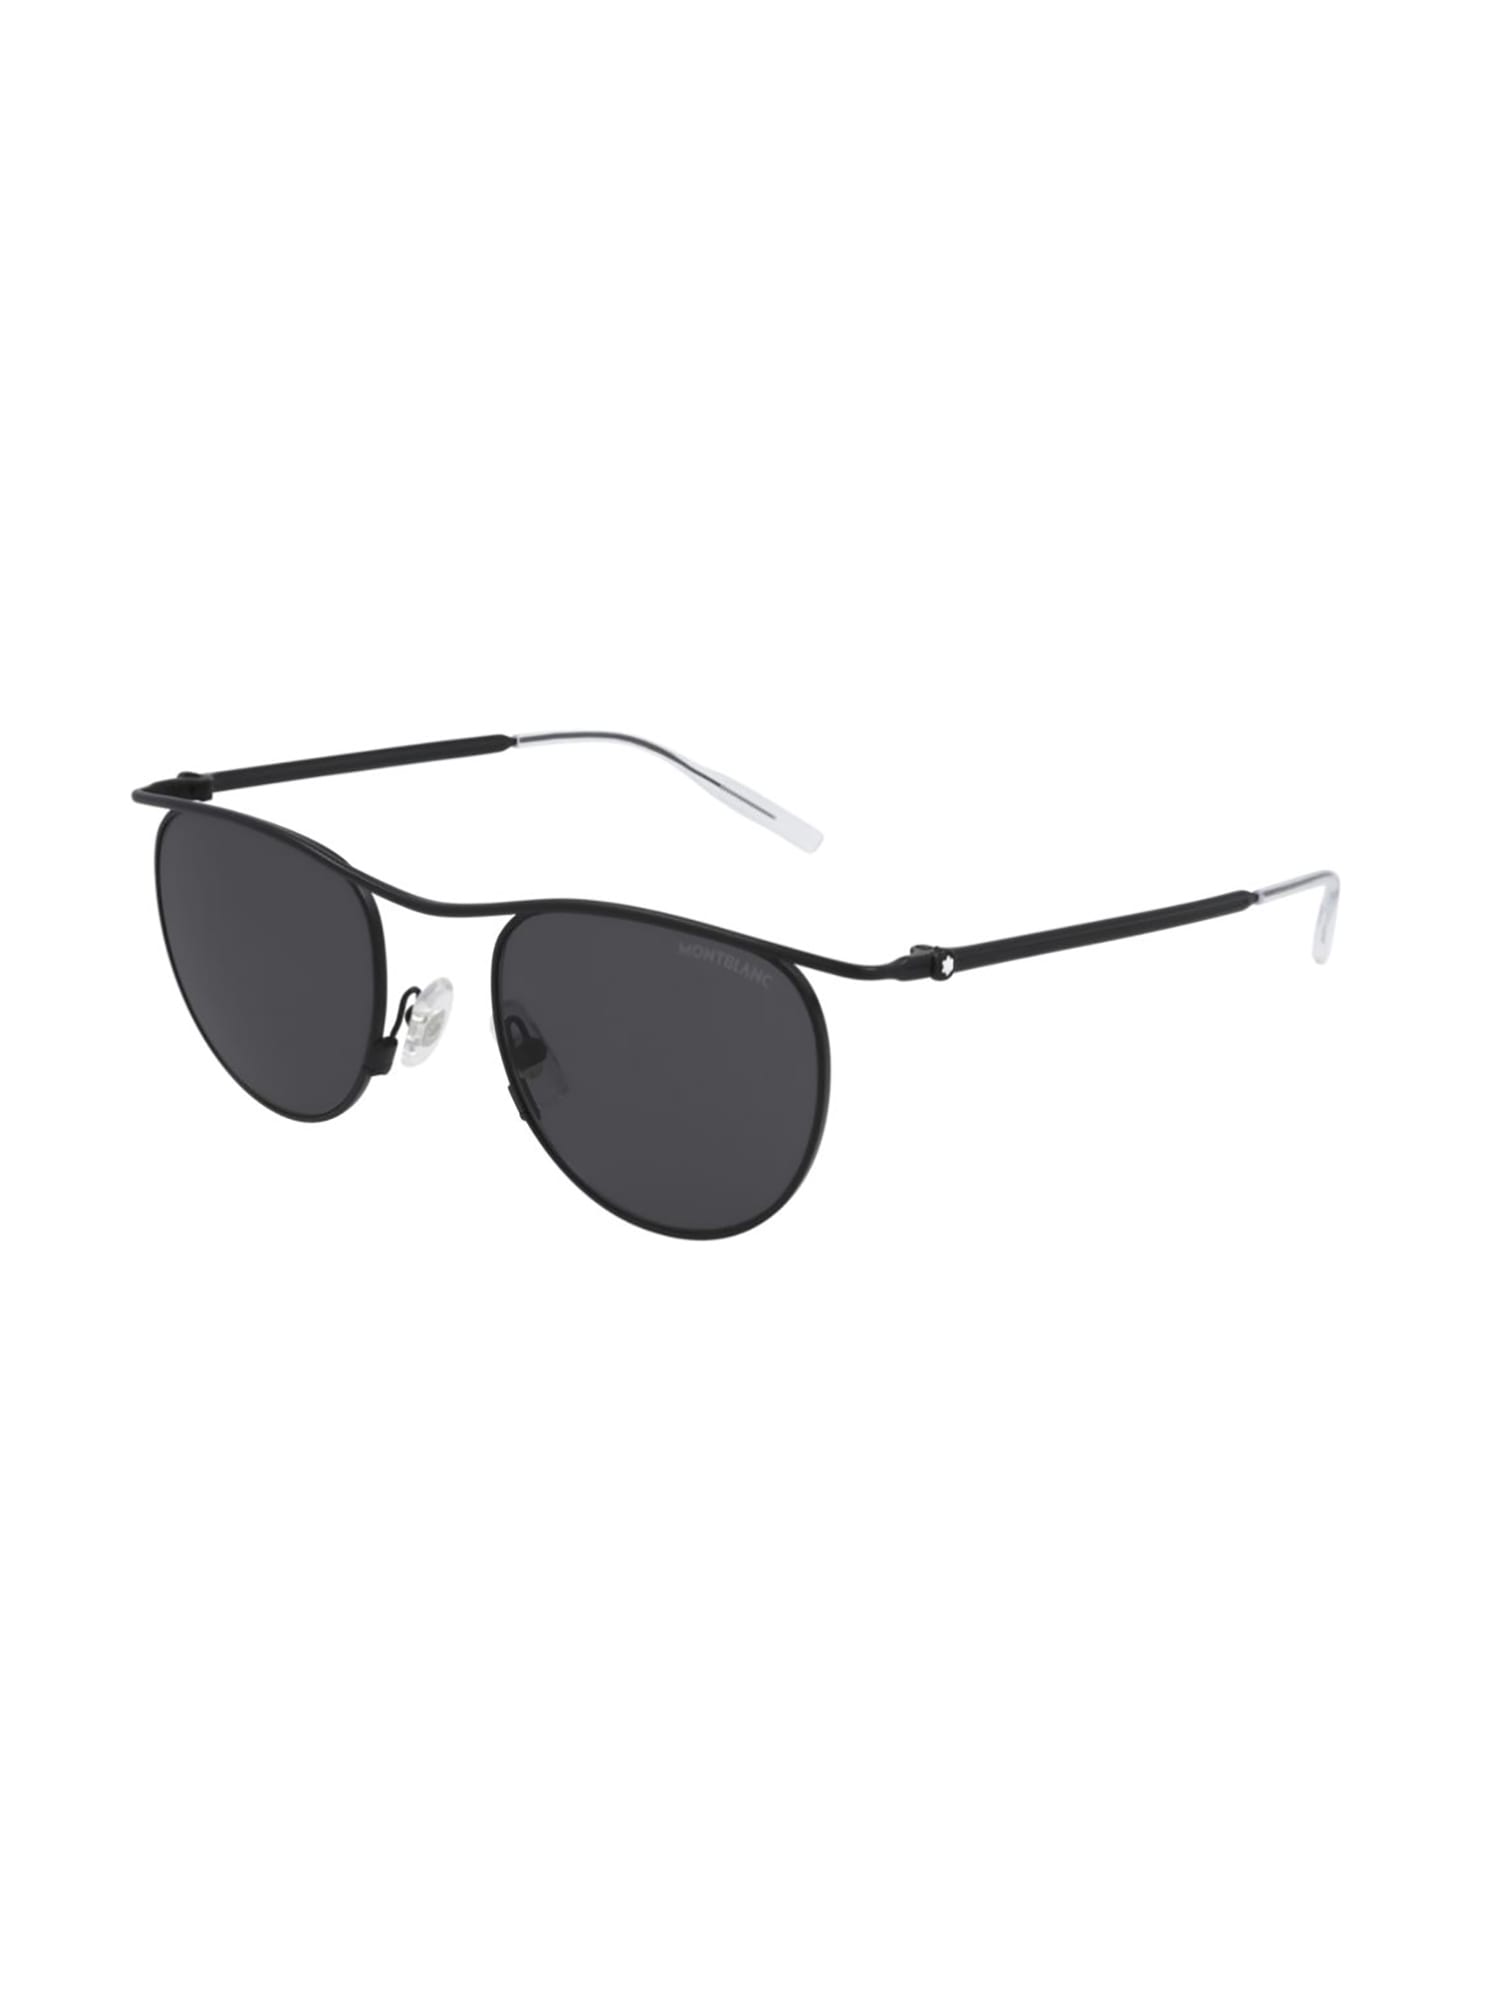 Montblanc Mb0168s Sunglasses In Black Black Grey